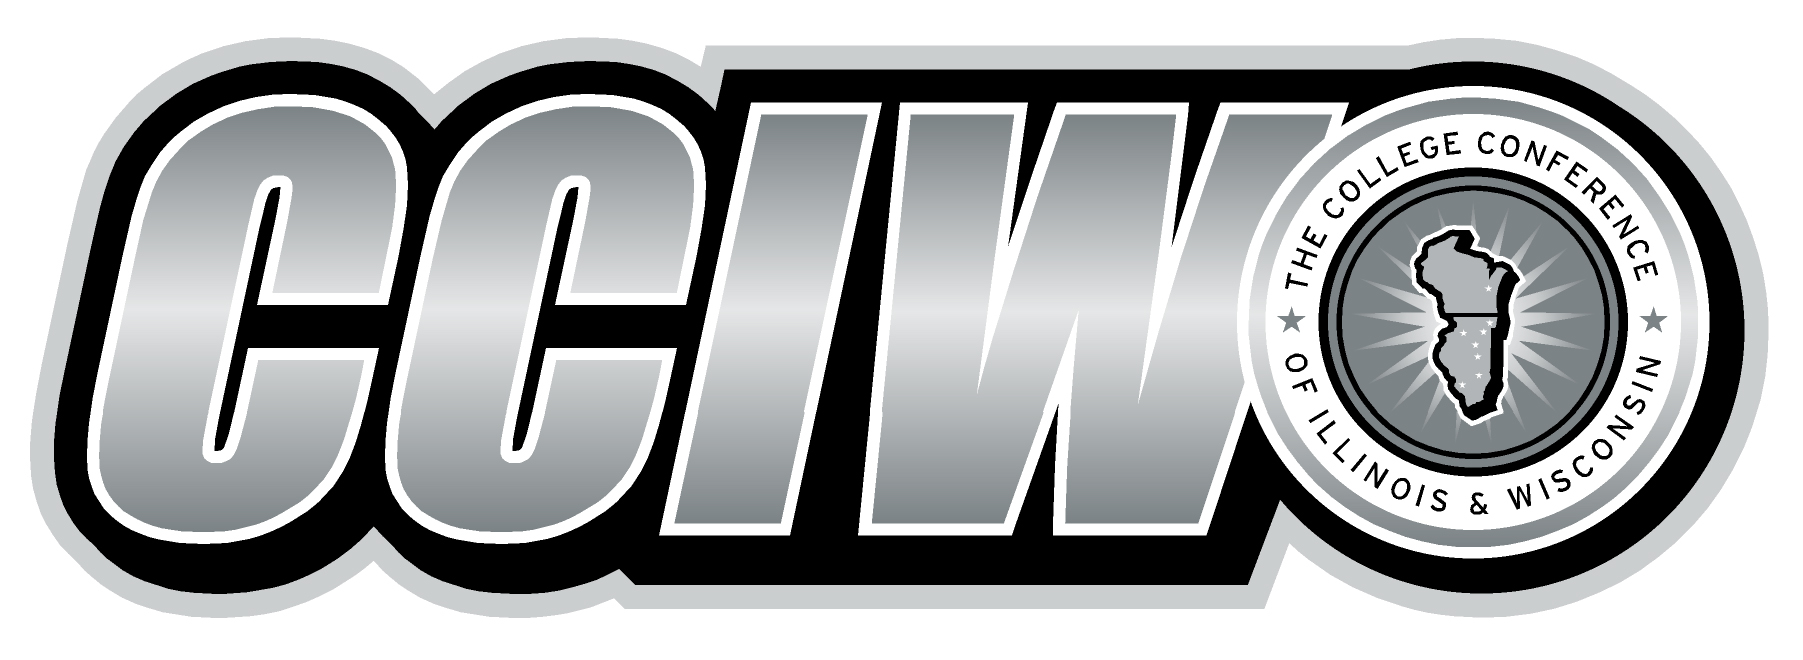 Wrestling joins CCIW as associate member